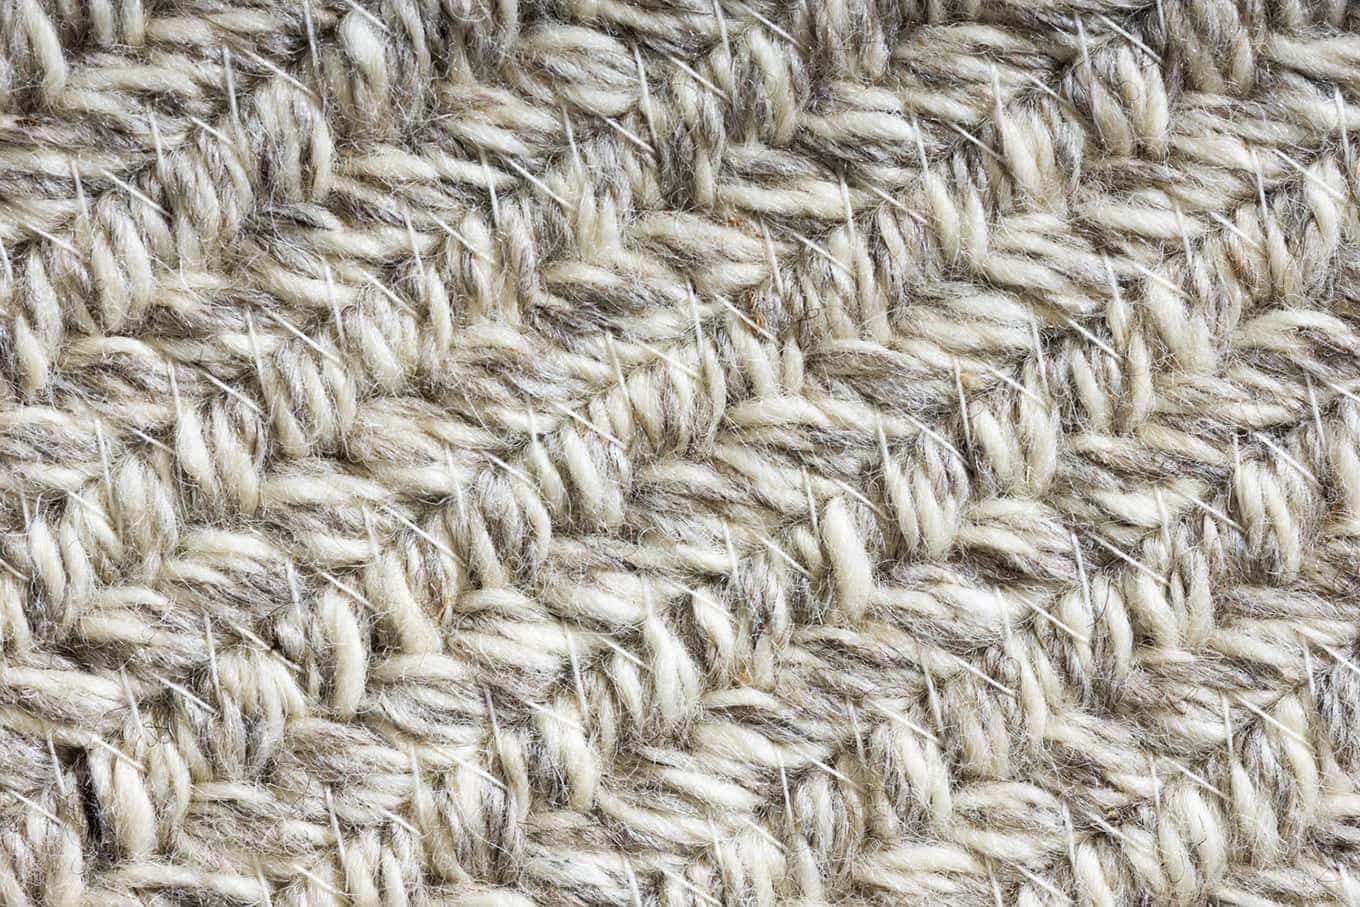 Close-up view of natural rug fibers